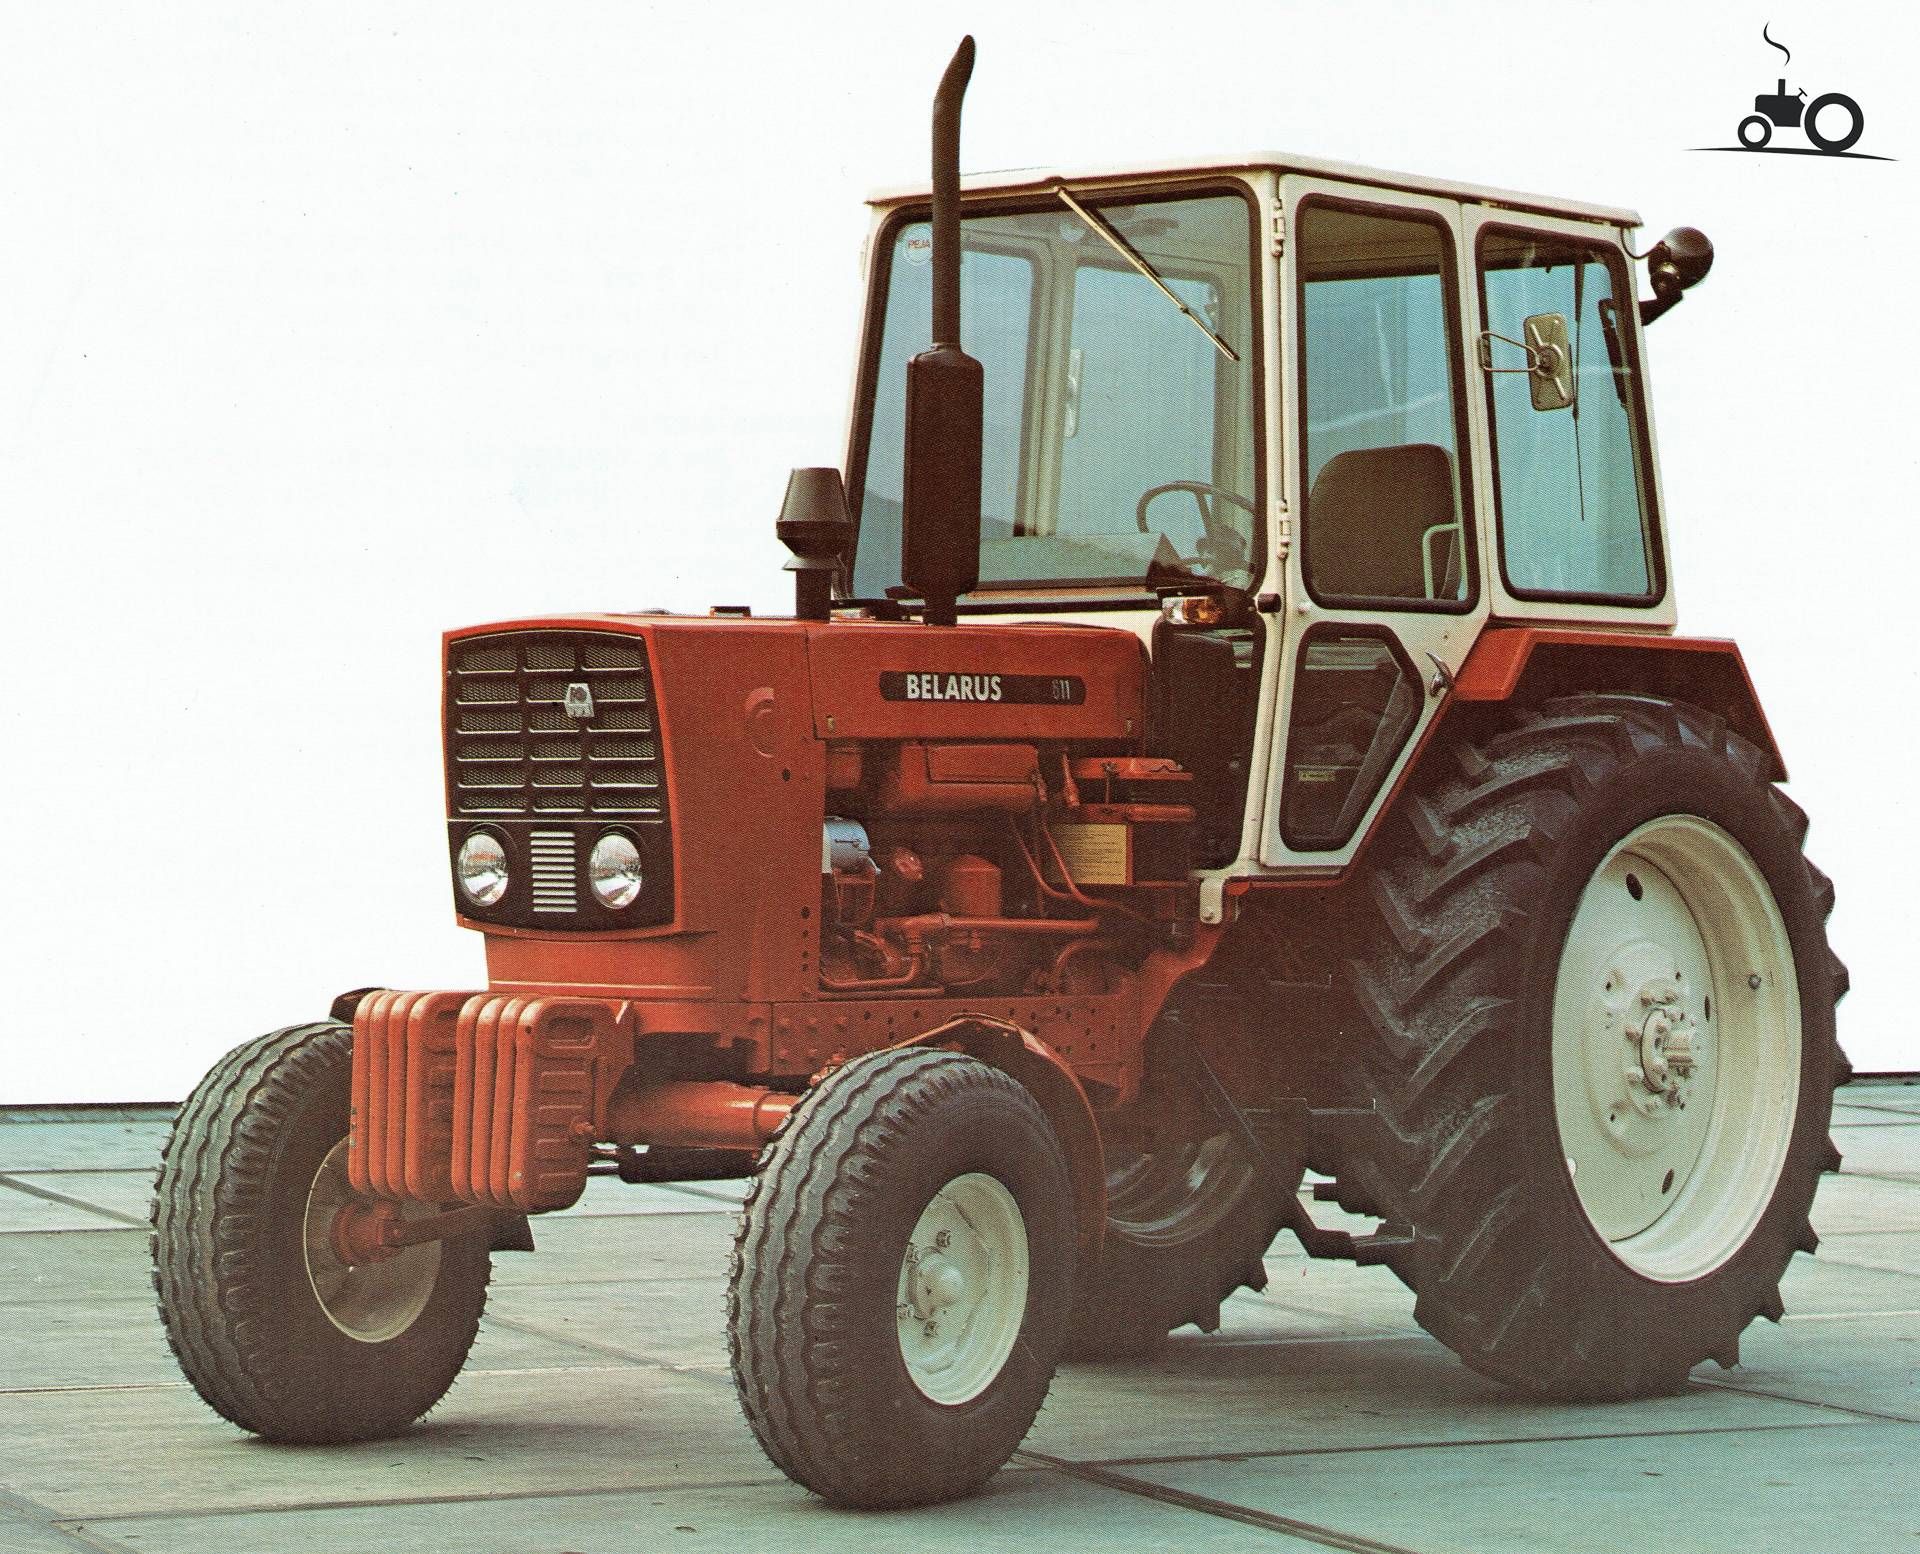 Трактор юмз-6: технические характеристики, устройство, схема, фото и видео